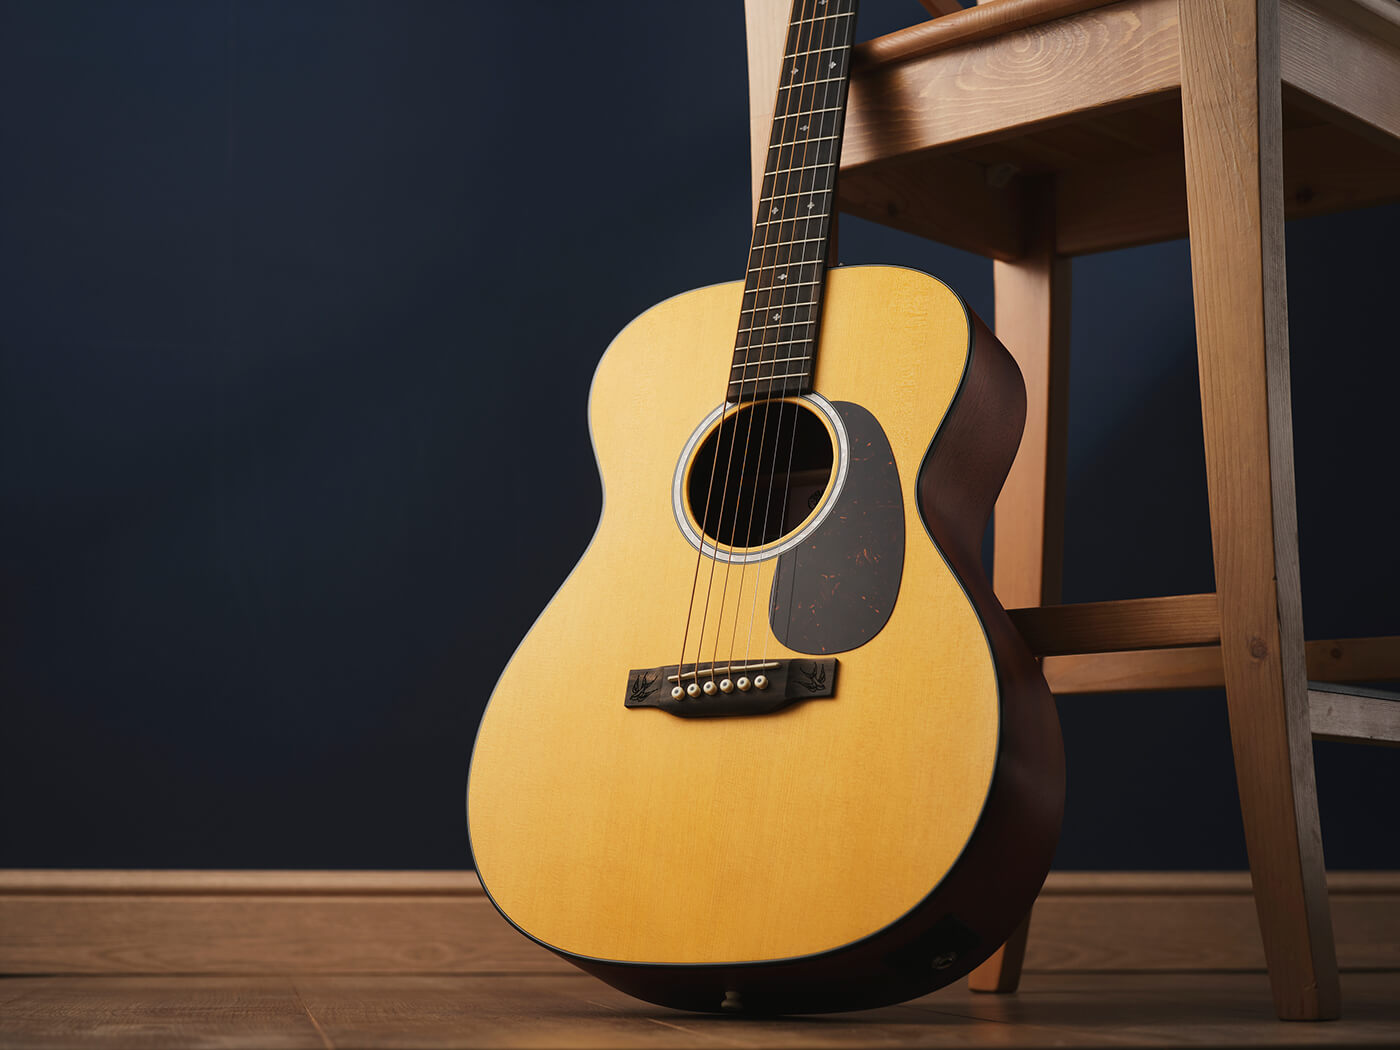 Shawn Mendes’ signature Martin guitar, the 000JR-10E Shawn Mendes, photo by Adam Gasson